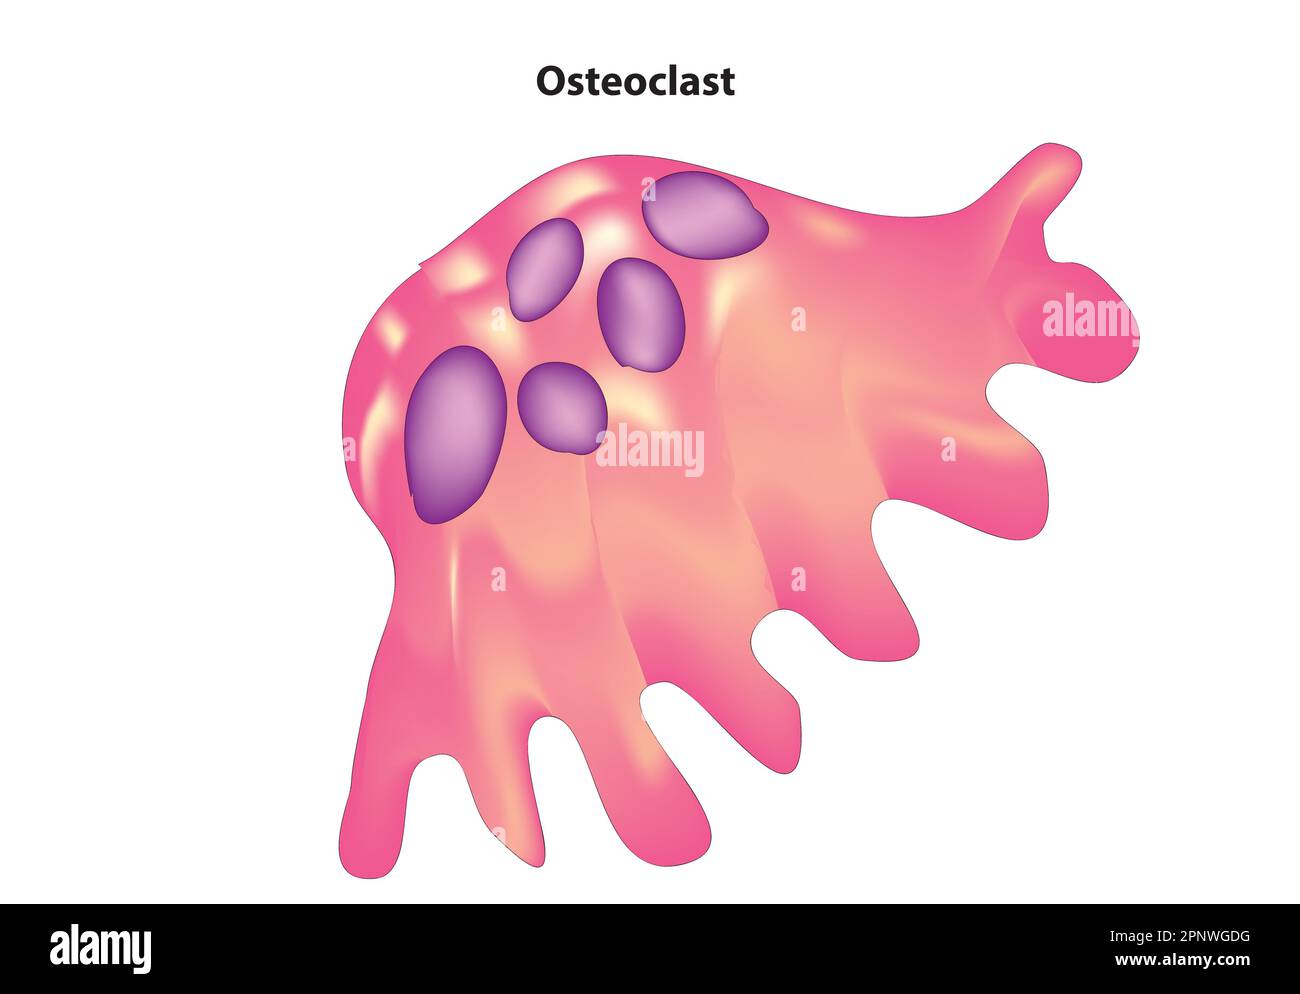 osteoclast Stock Vector